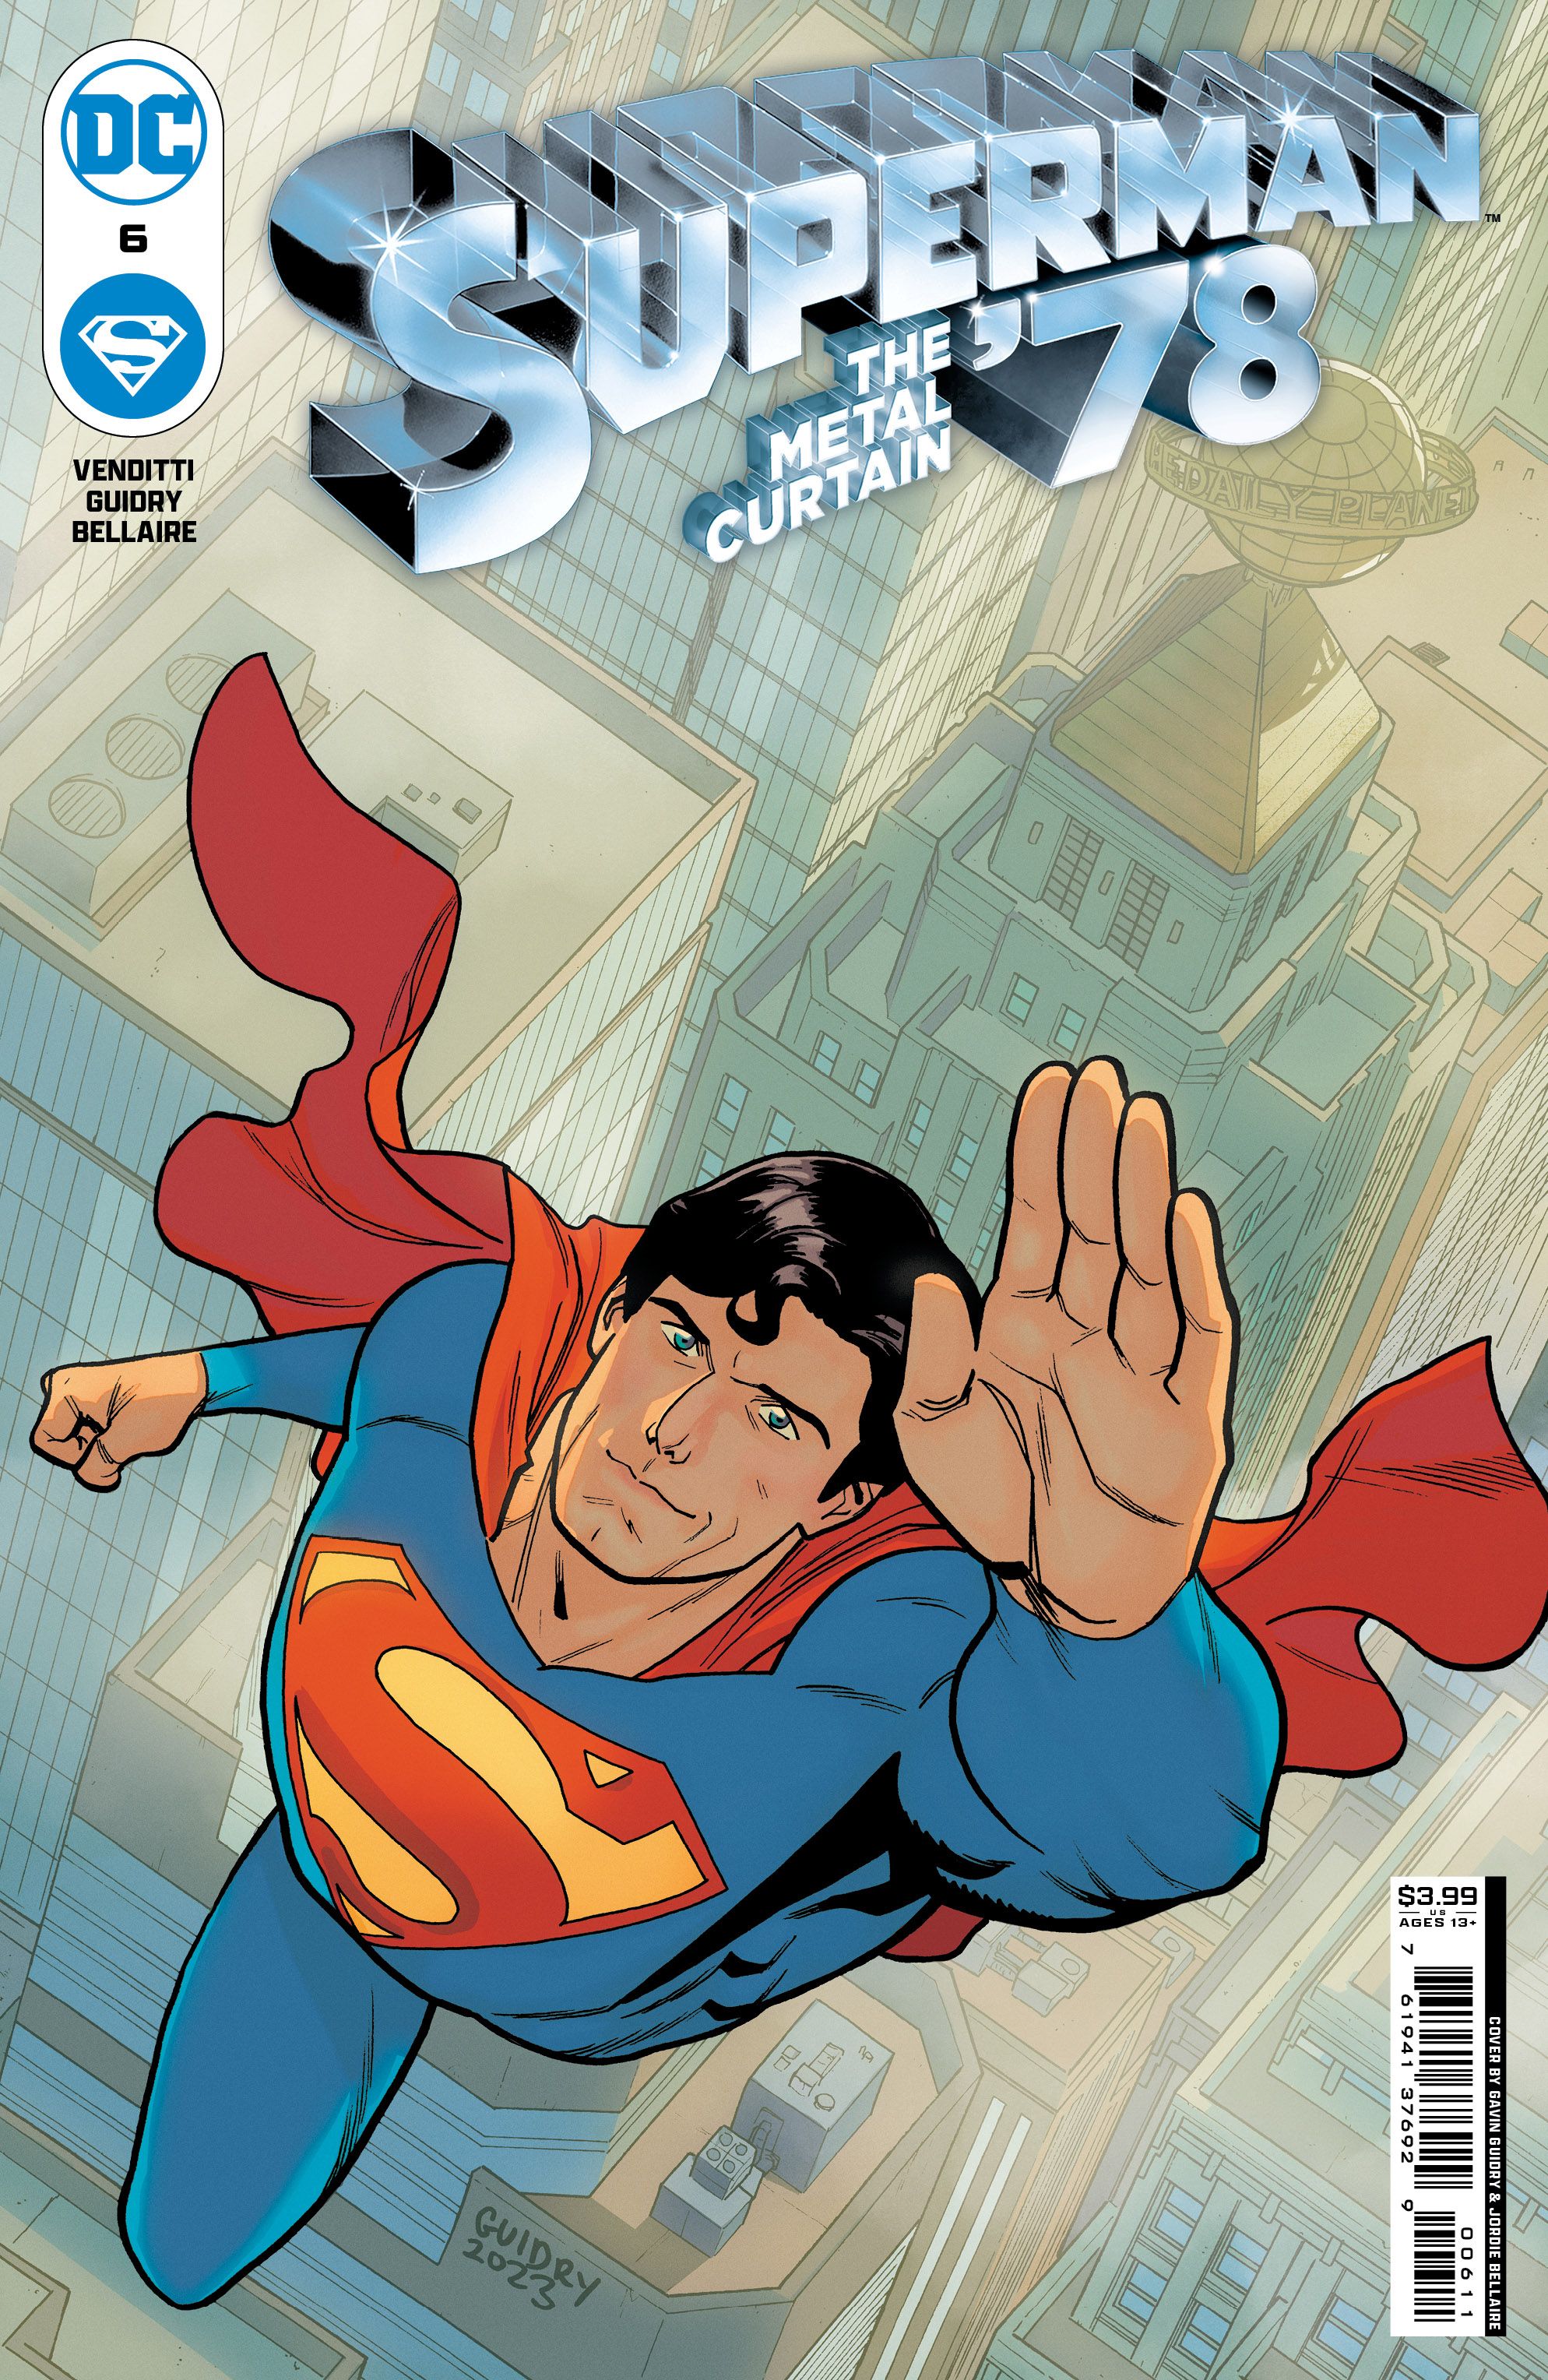 Superman '78: The Metal Curtain #6 Comic